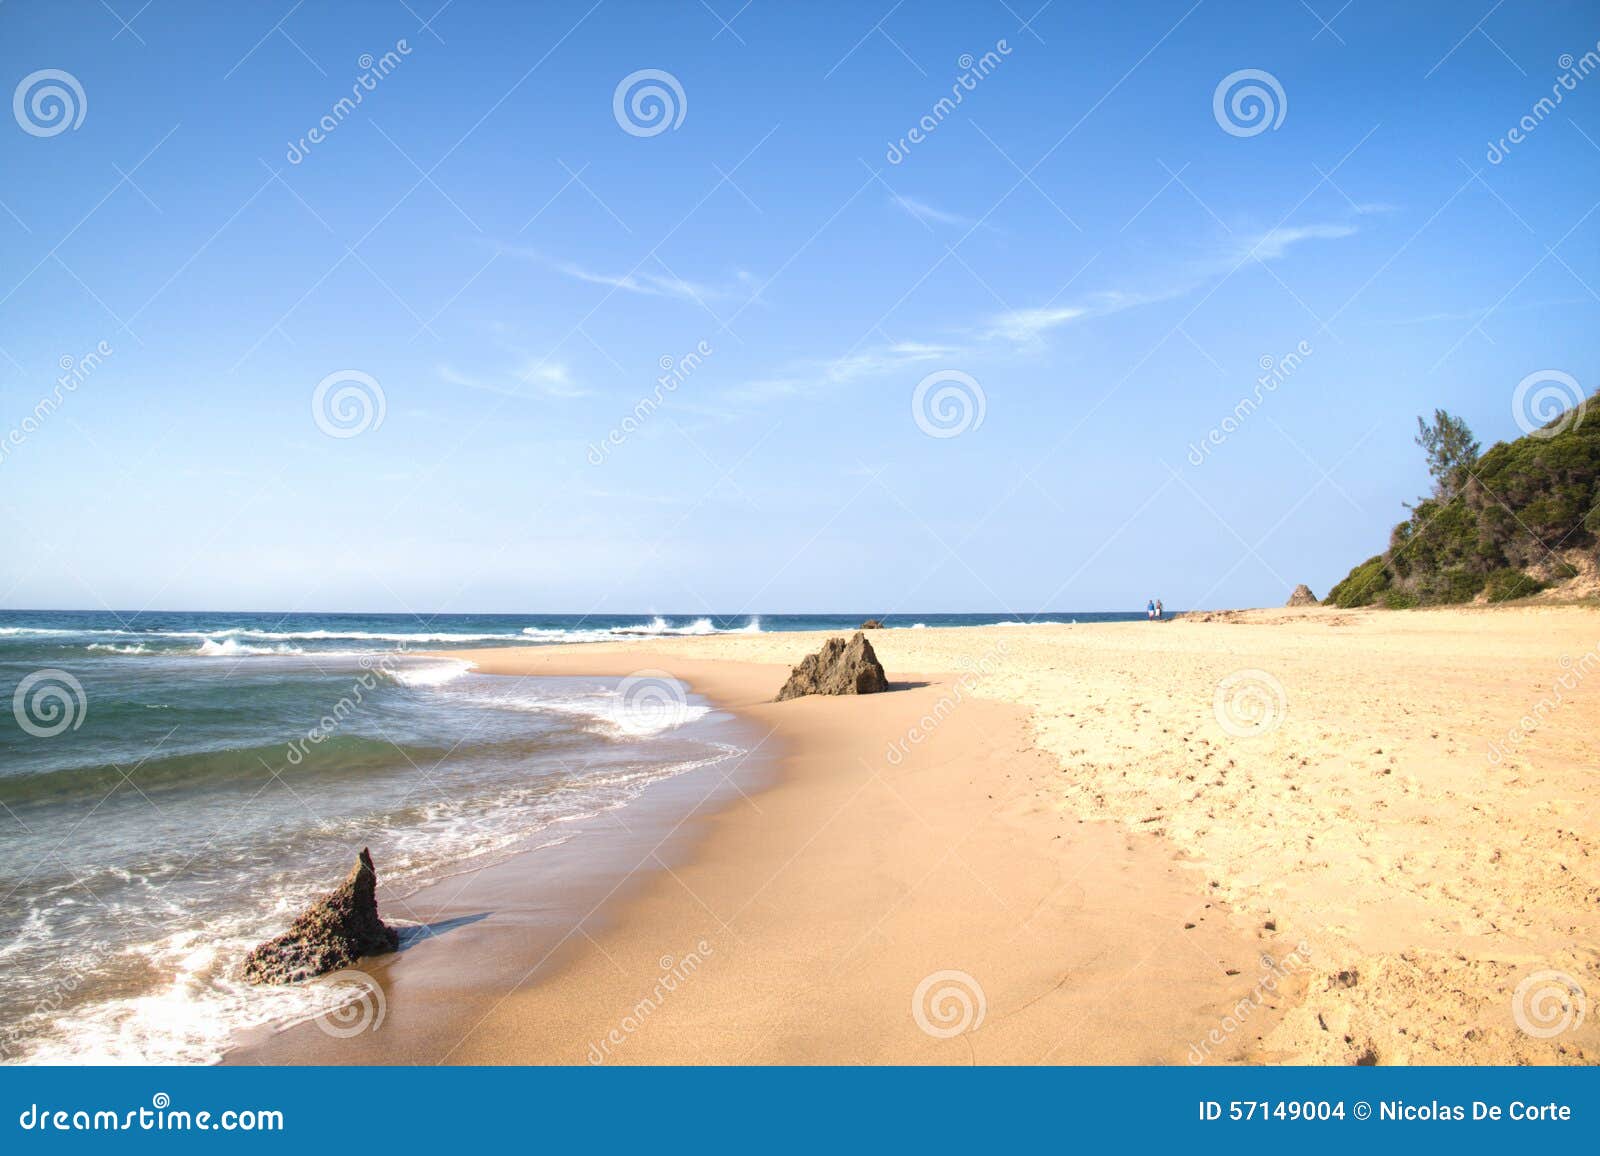 the beach of ponta do ouro